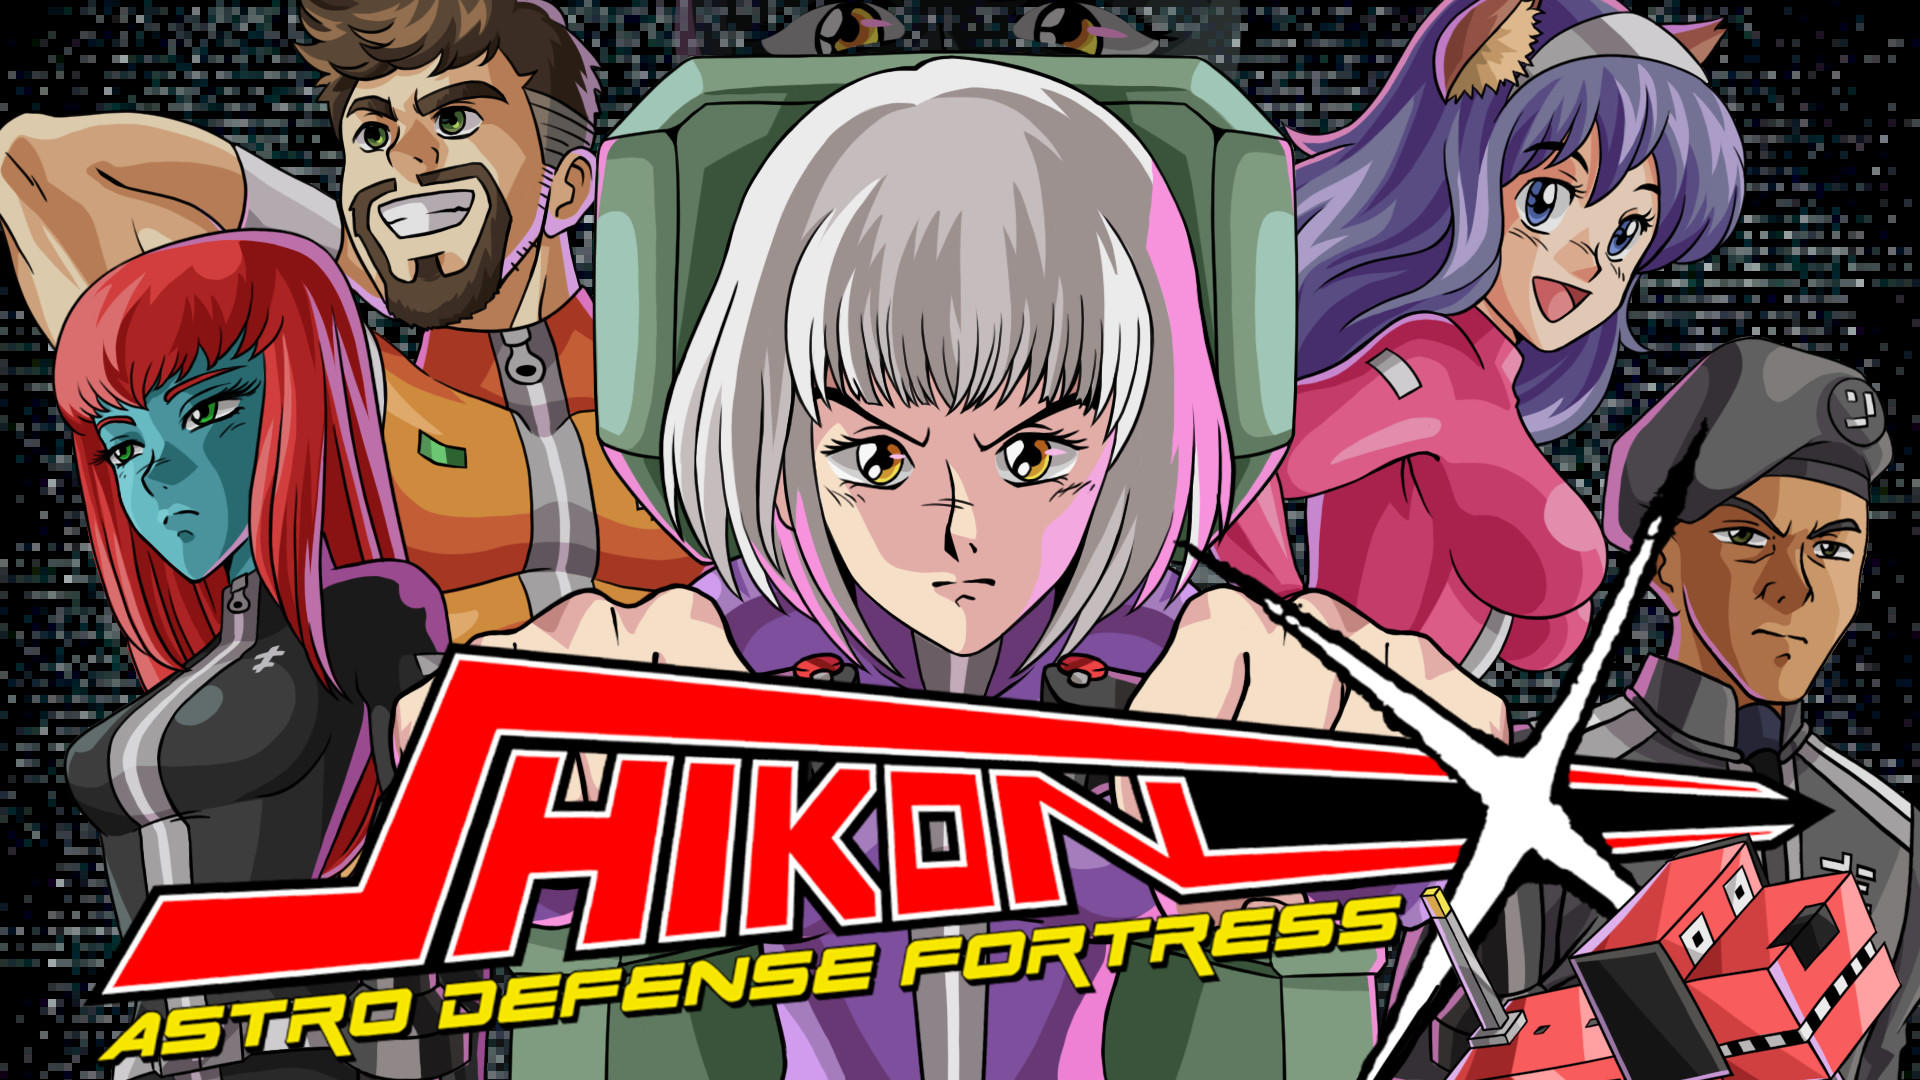 Shikon-X Astro Defense Fortress遊戲截圖